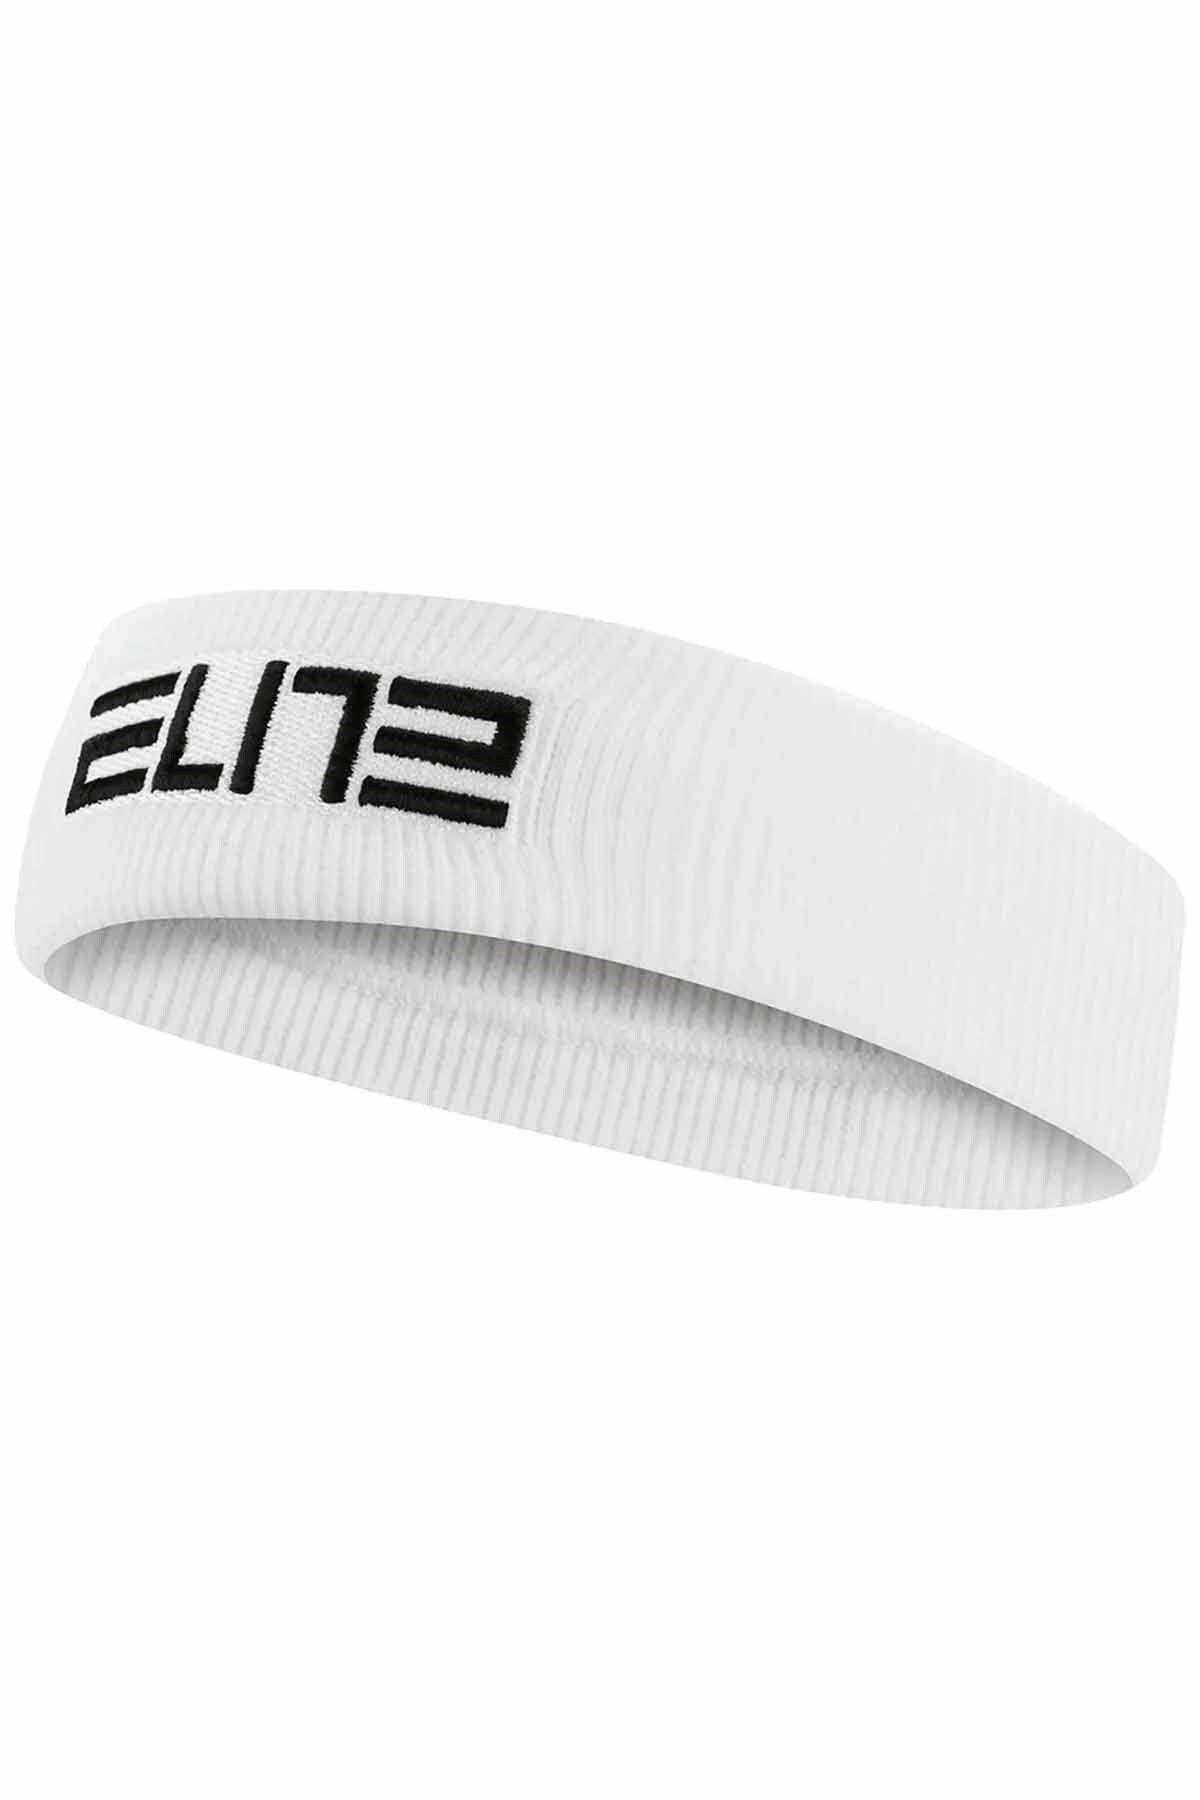 Nike N1006699-101 Elite Saç Bandı